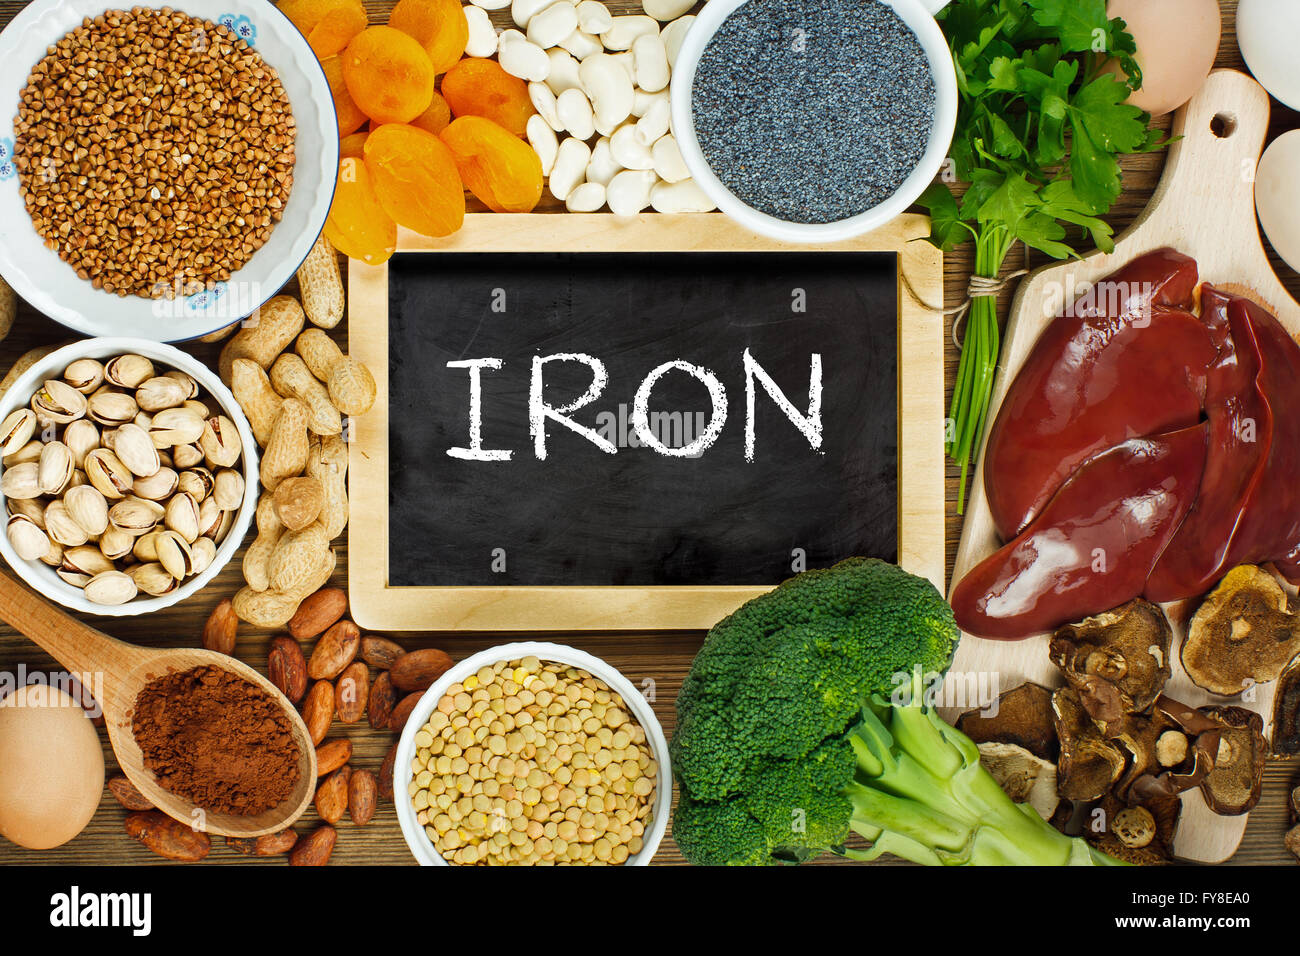 iron rich foods chart